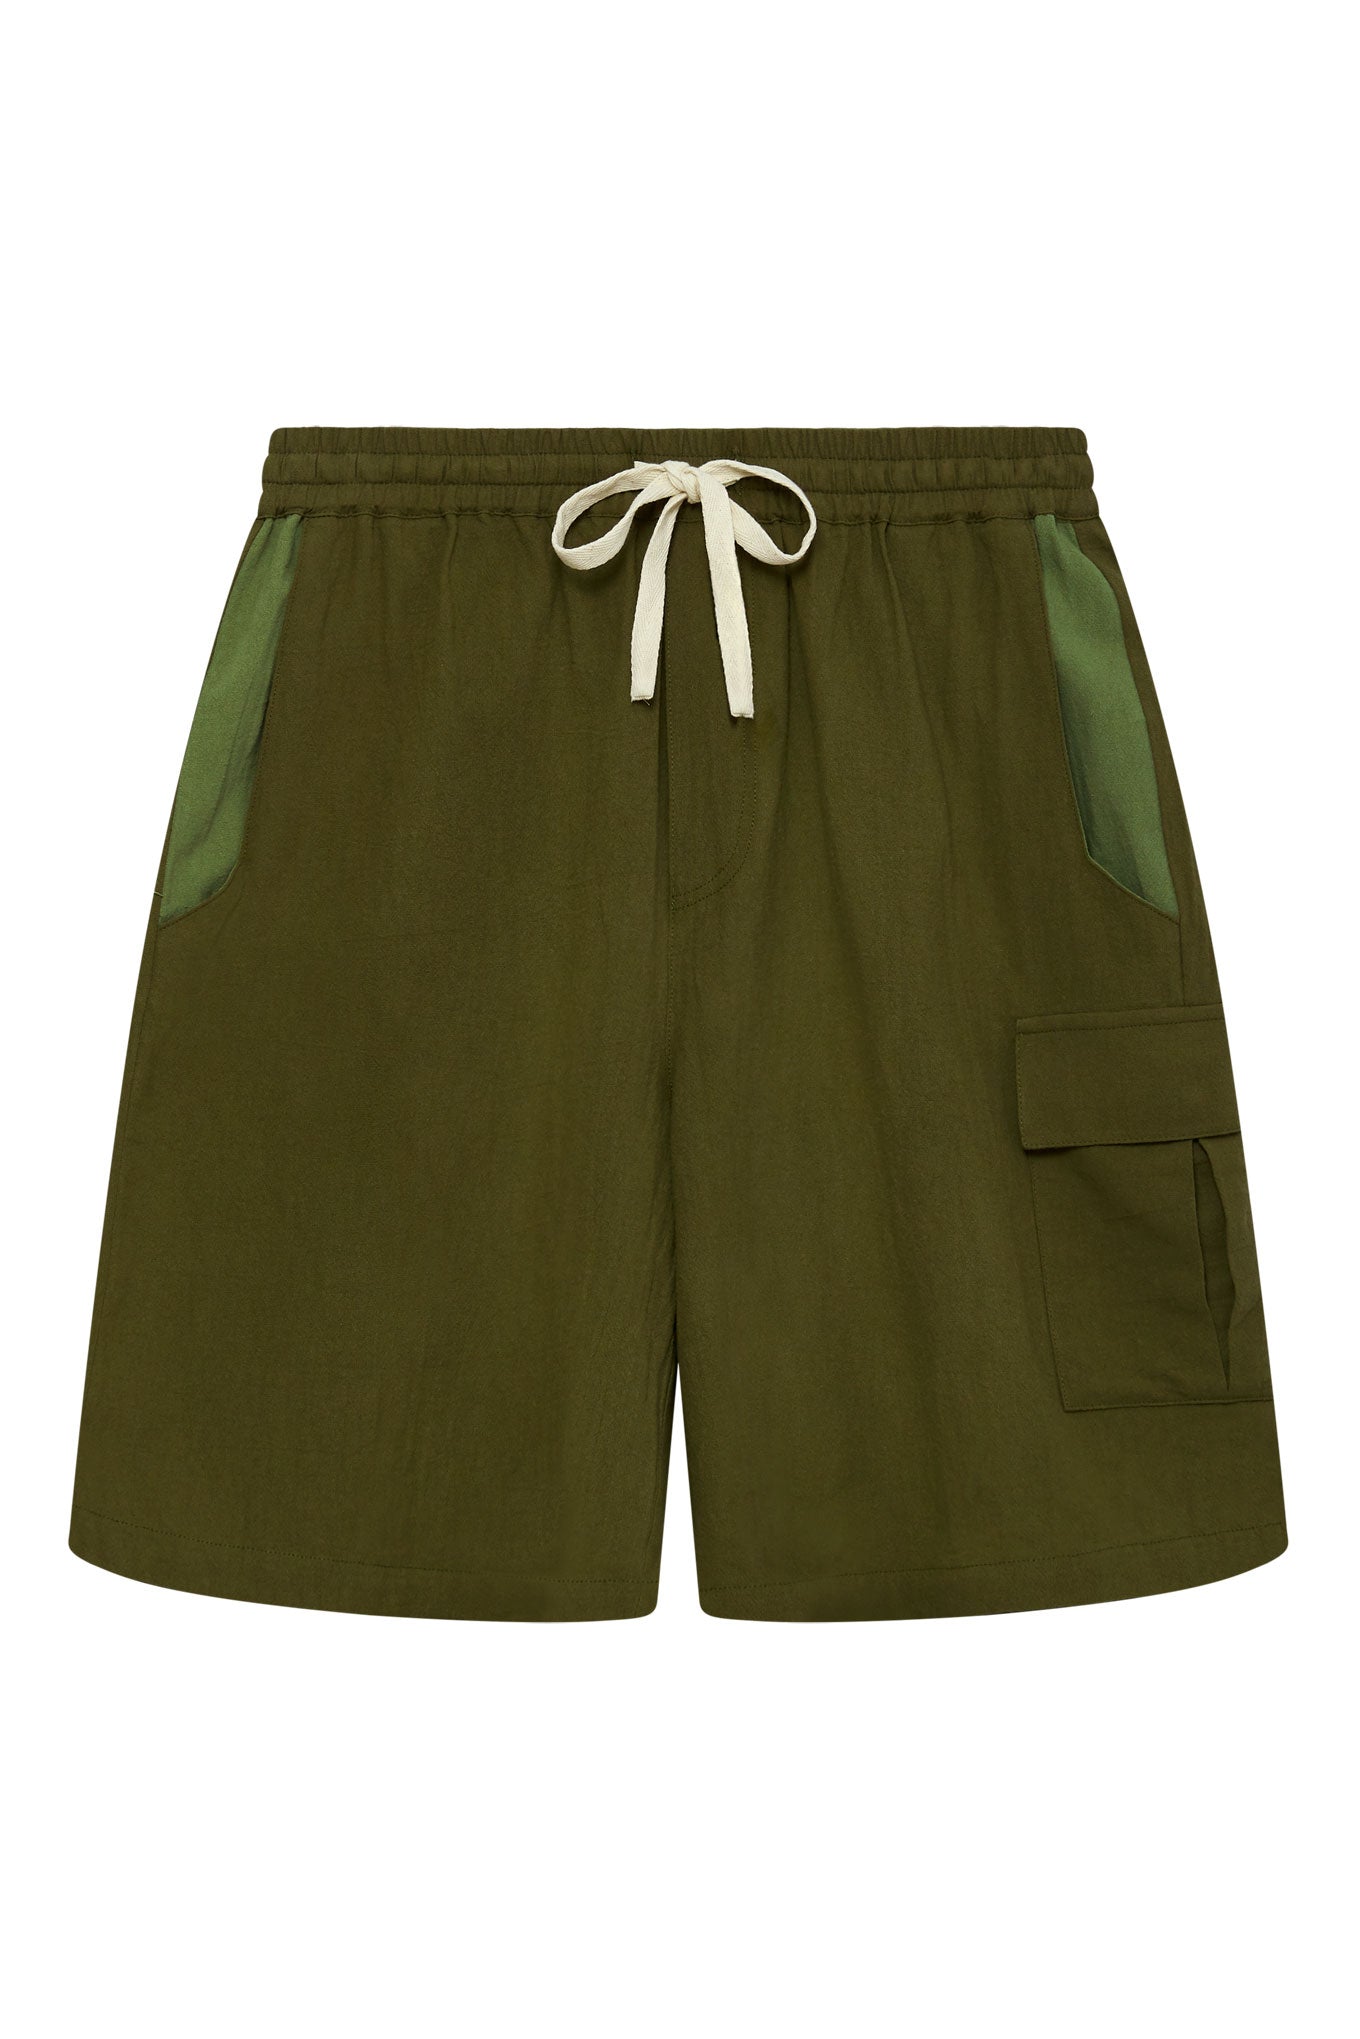 Komodo Men's Jasper - Organic Cotton Shorts Green Patchwork